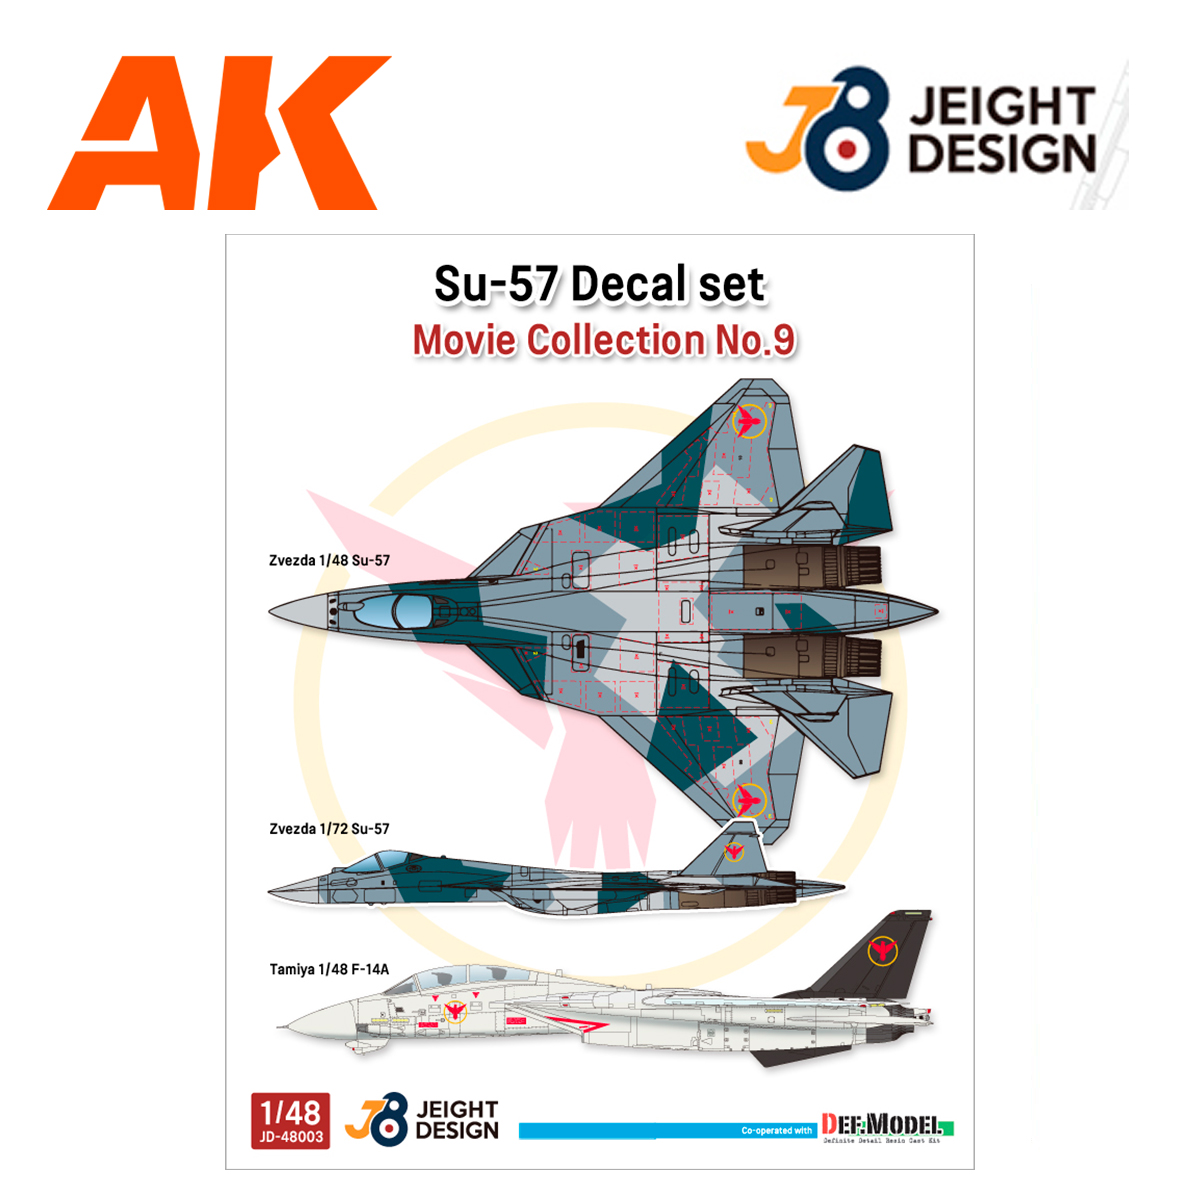 Su-57 Decal set – Movie Collection No.9 (for 1/48 Zvezda, Tamiya, 1/72 Zvezda kit)